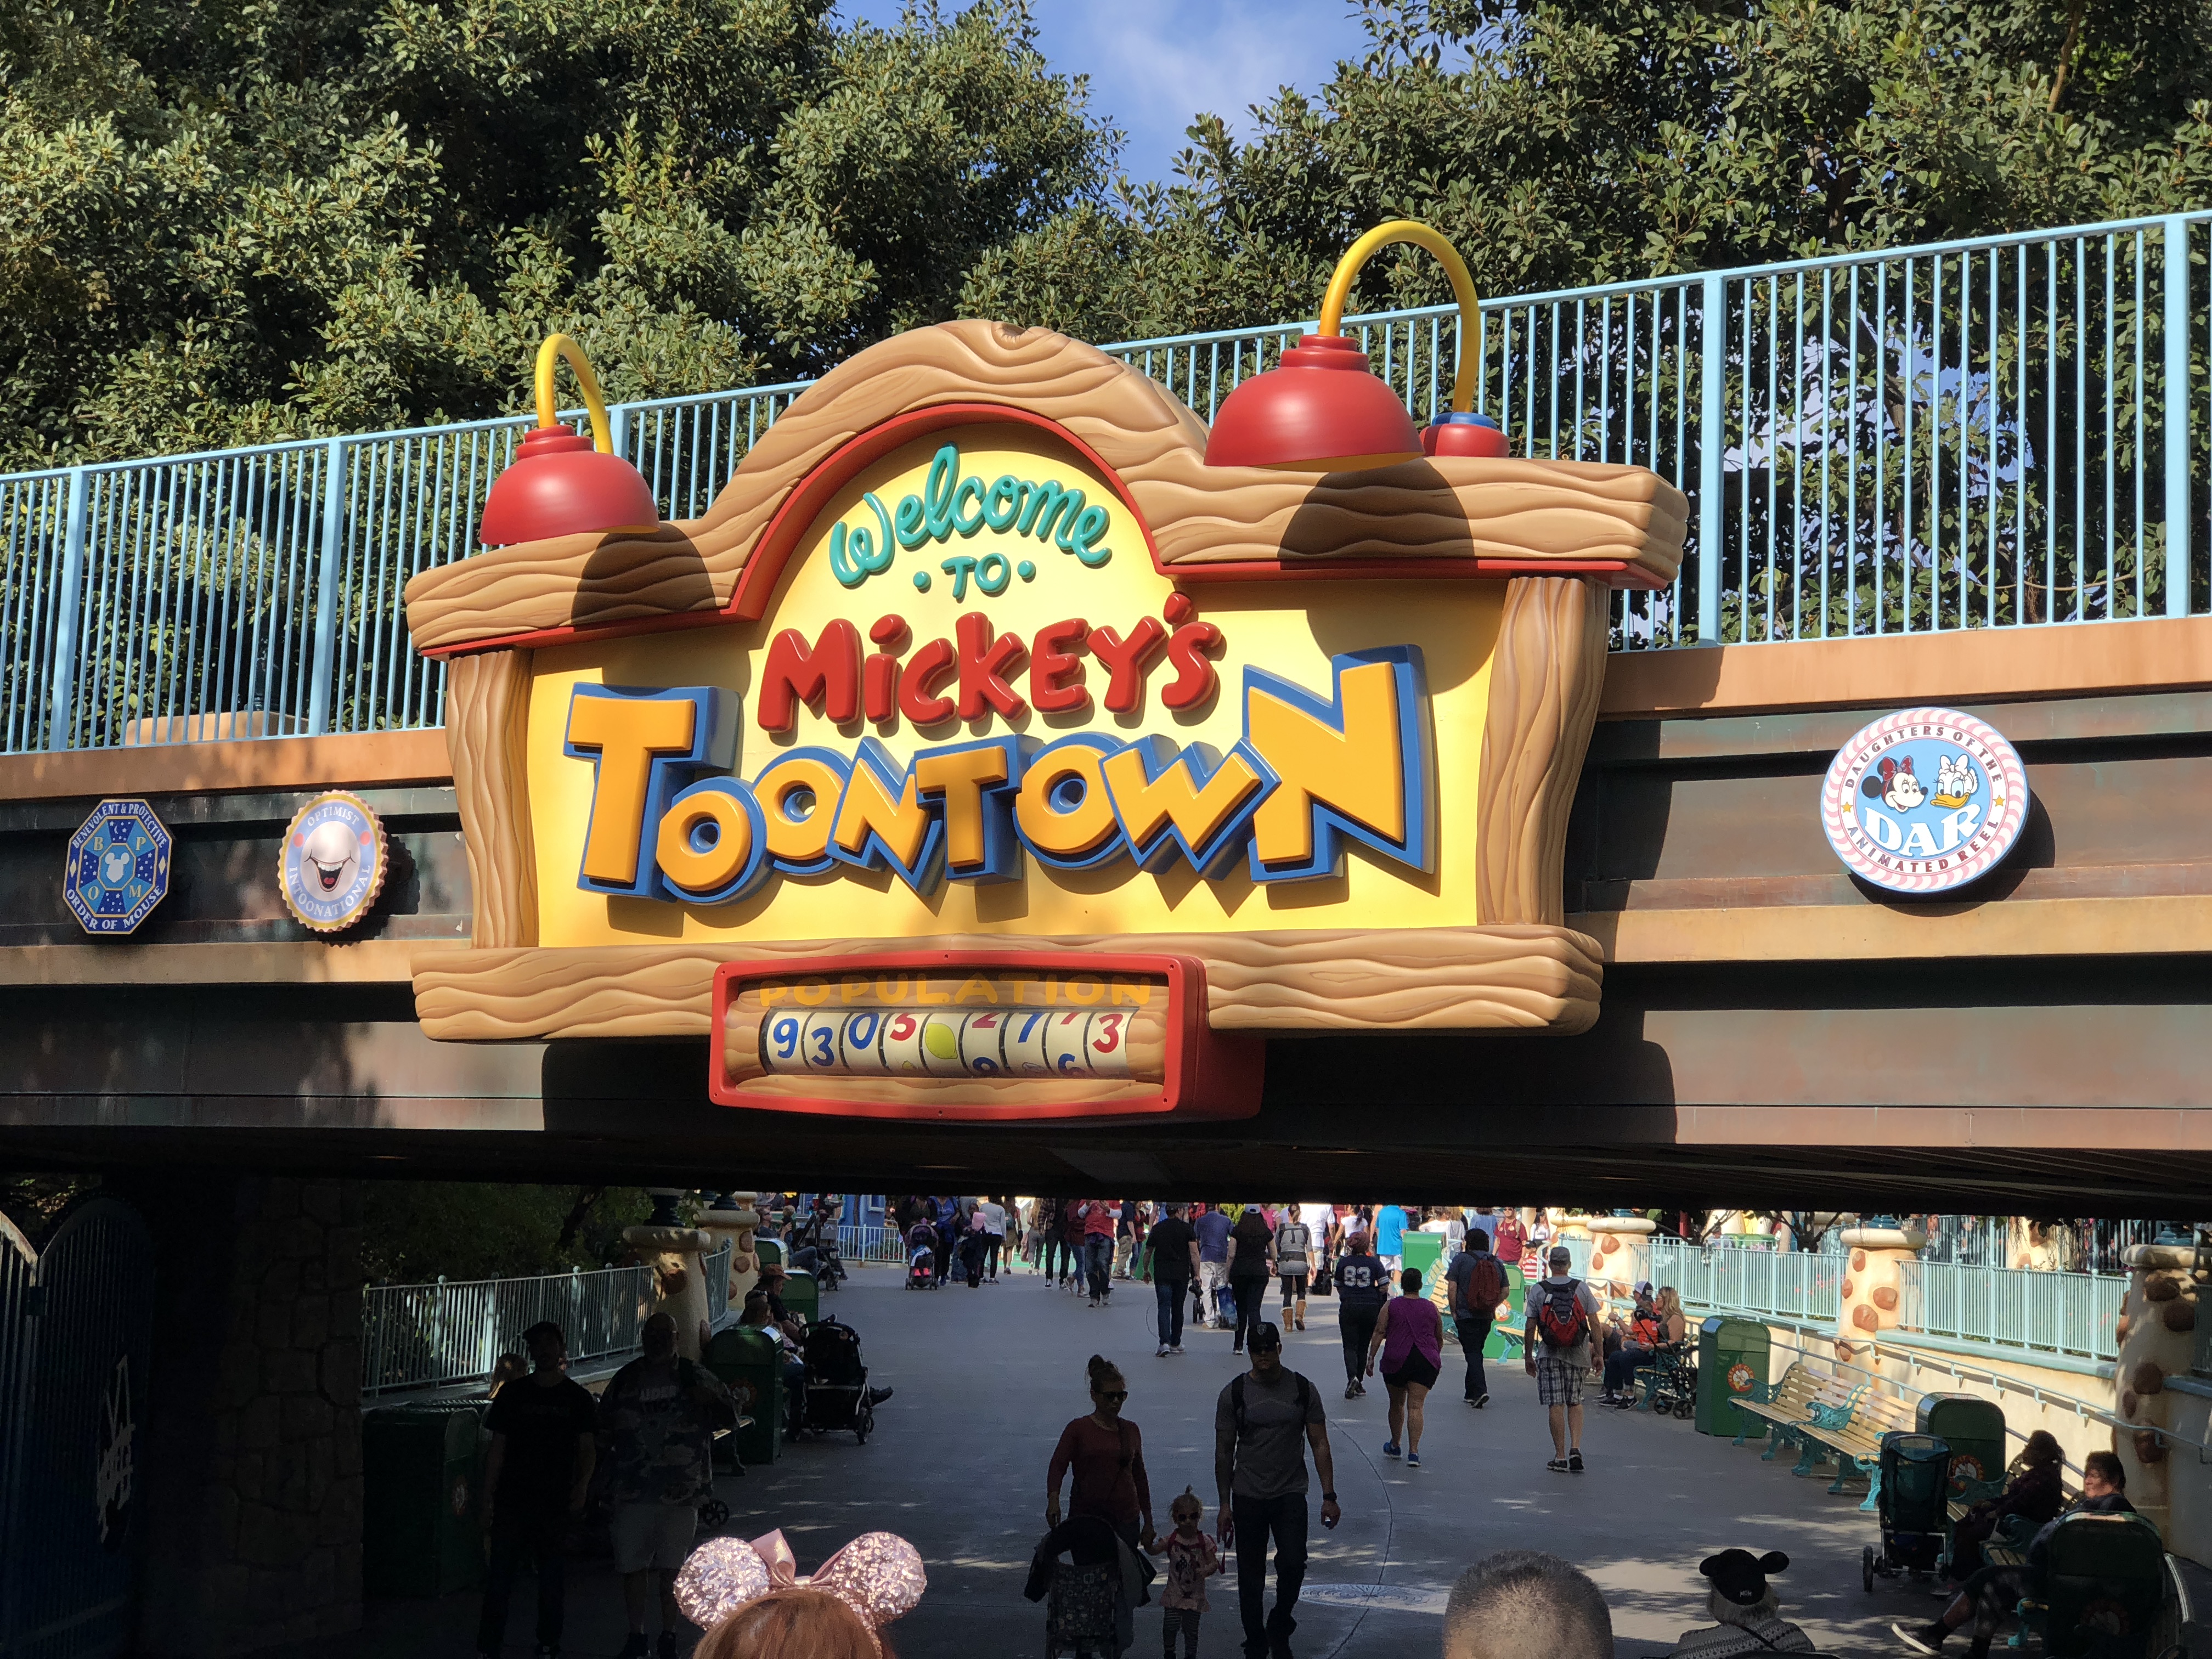 How Disneyland Celebrated the Anniversary of Mickey’s Toontown